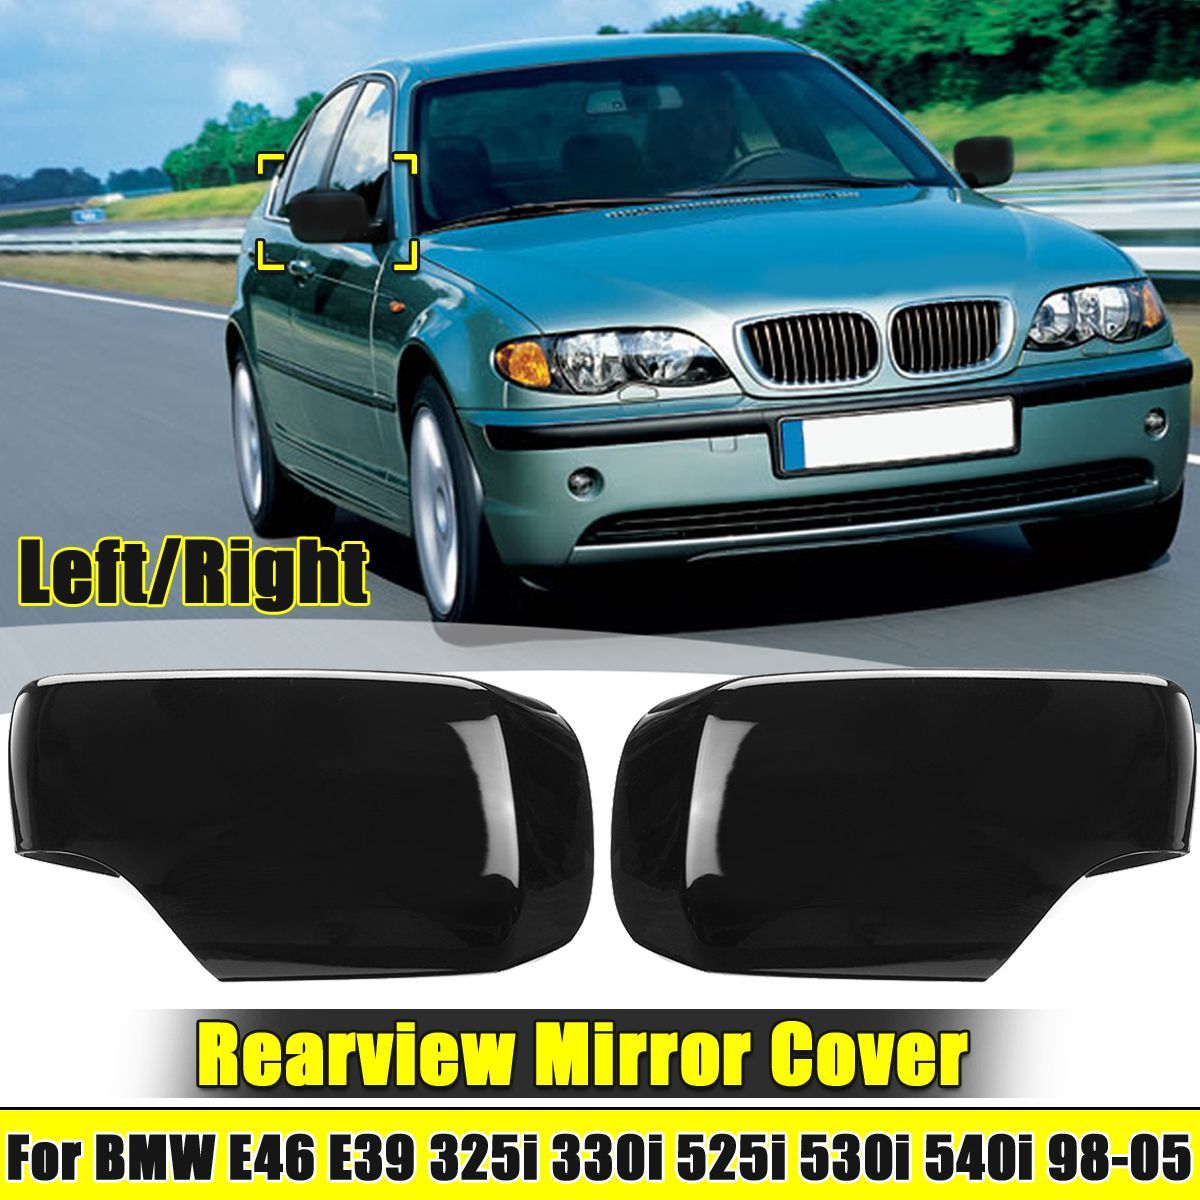 Car-Rearview-Door-Mirror-Cover-Cap-LeftRight-For-BMW-E46-E39-325i-330i-525i-530i-540i-1998-2005-1680706